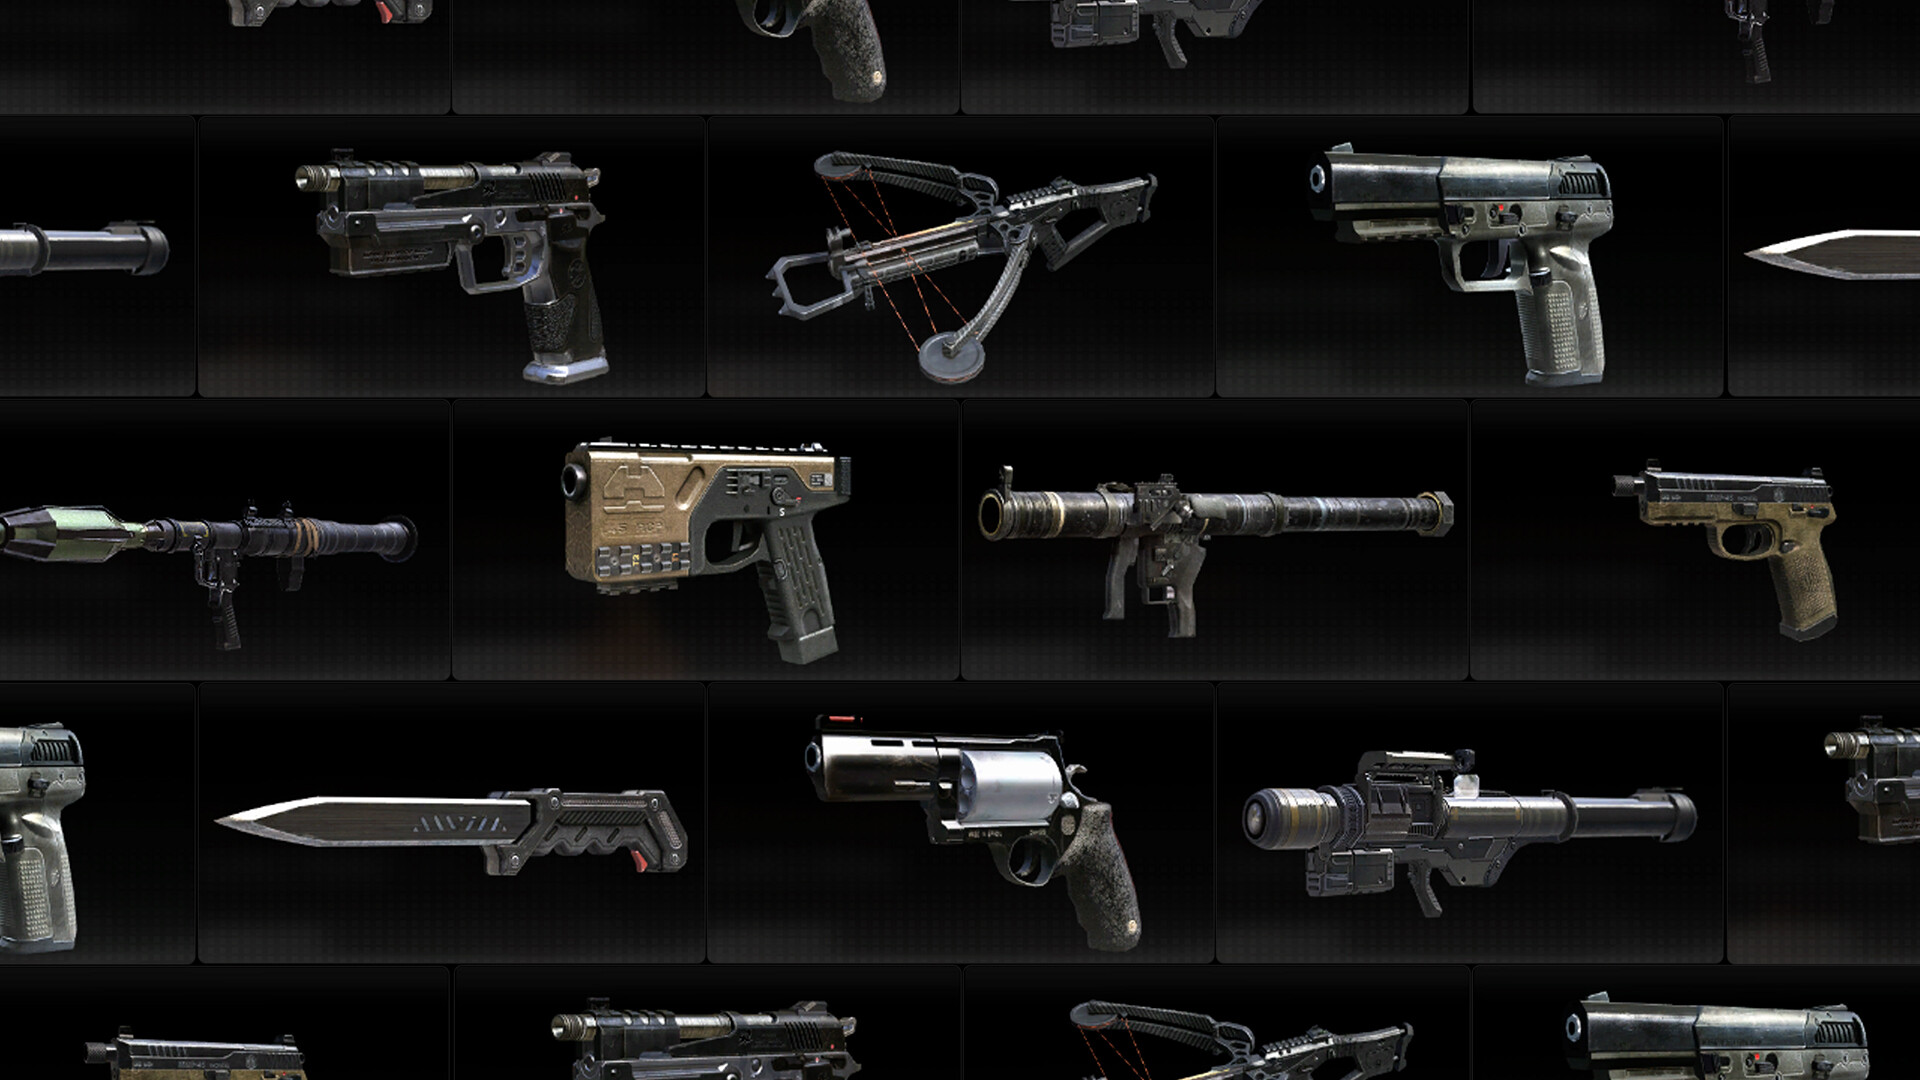 Cod Black Ops 2 Wallpaper Guns